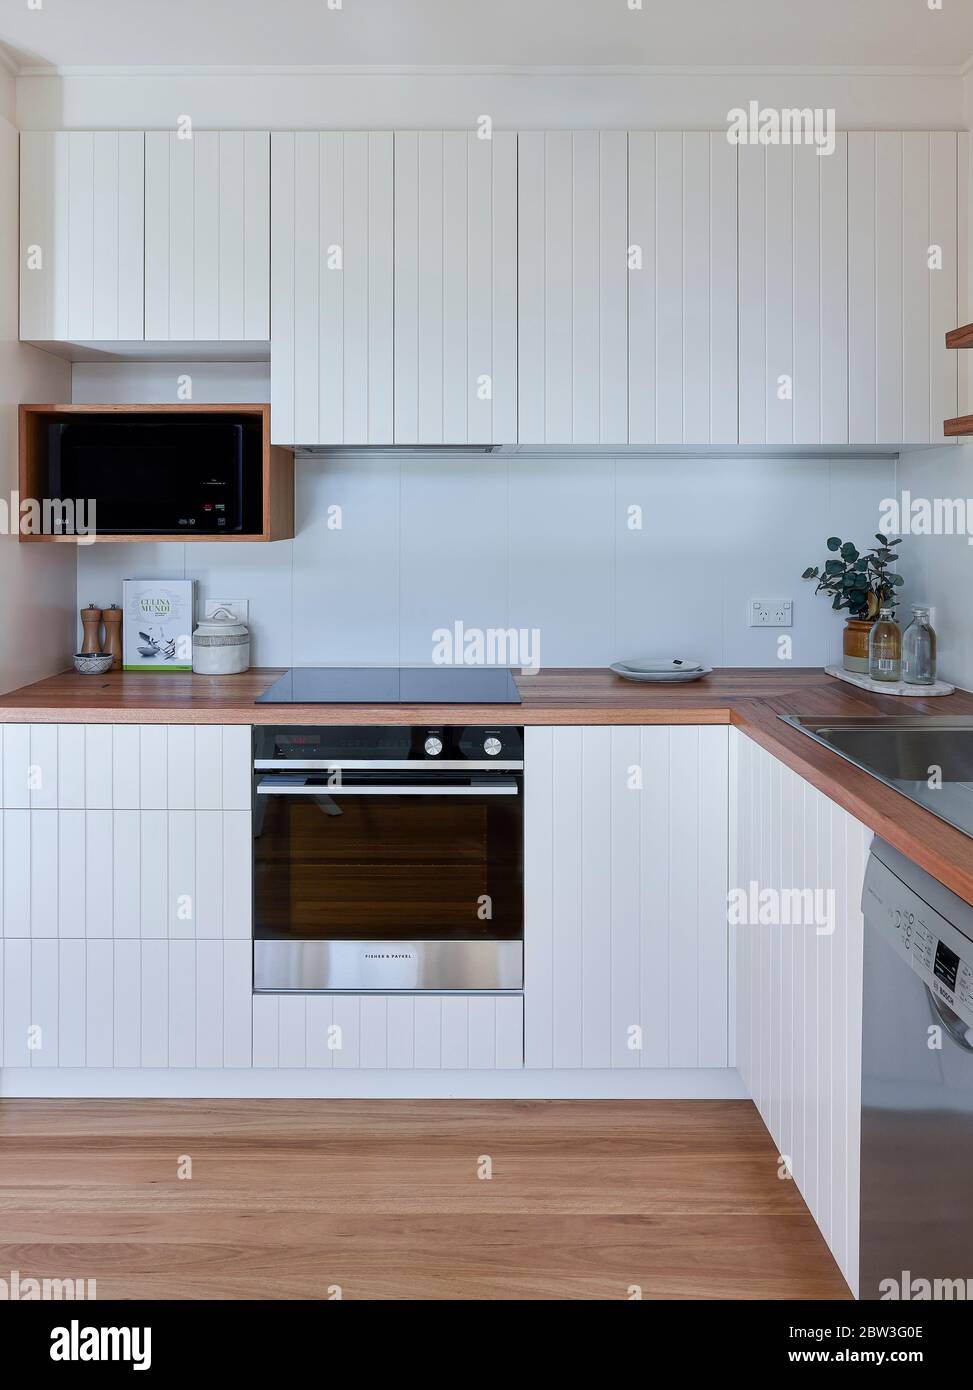 Kitchen. Hampden Street Granny Flat, Ashfield, Australia. Architect: Hector Abrahams Architects, 2020. Stock Photo